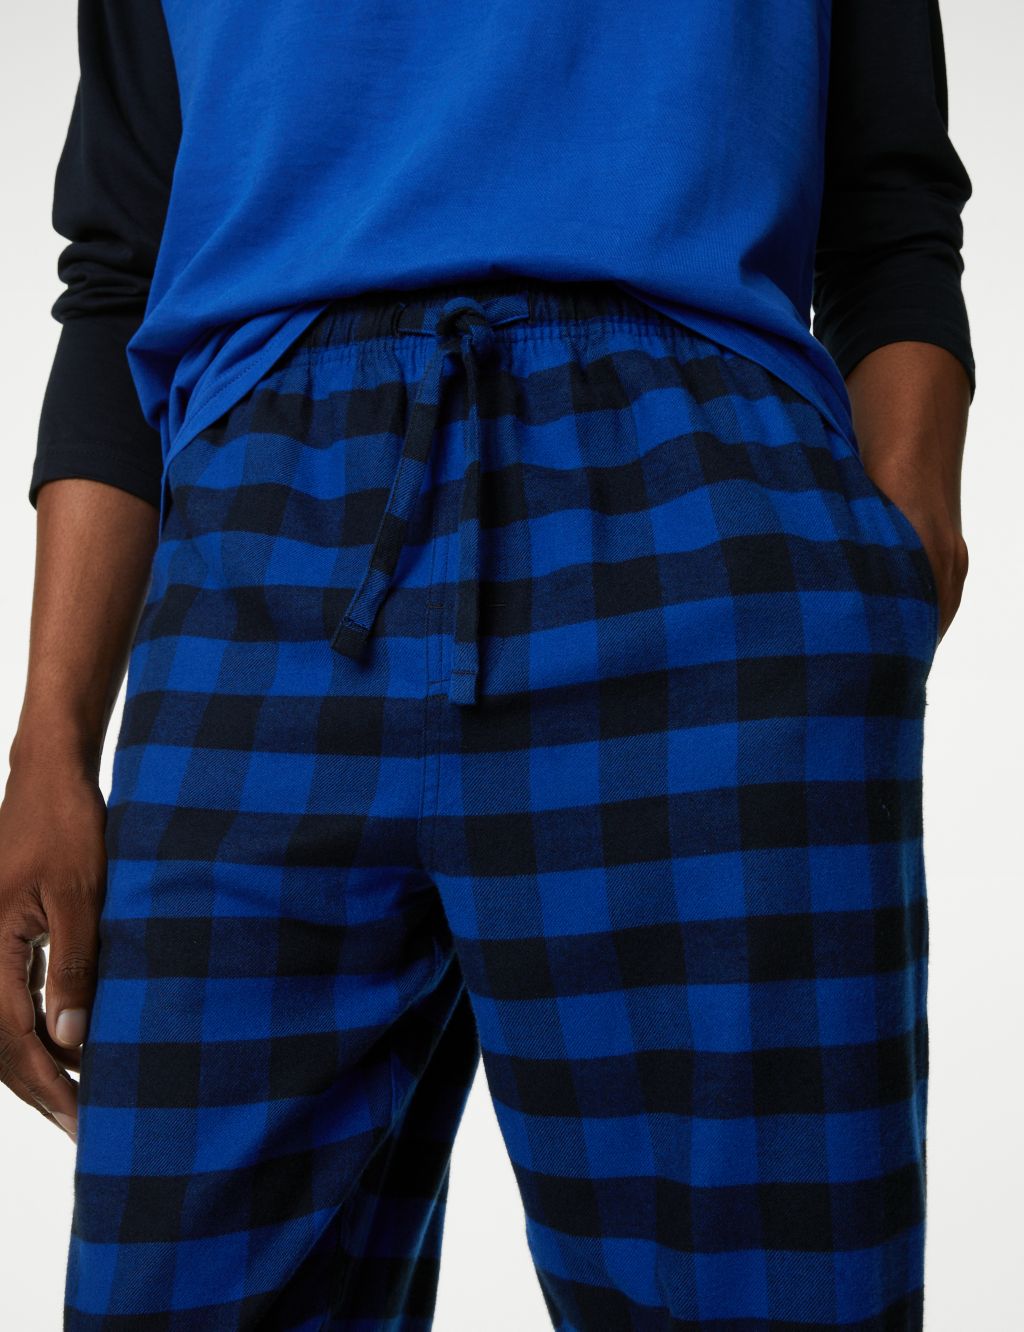 Blue Check Mens Cotton Flannel/brush Cotton PJ Pyjama Set Pj's Pyjamas PJ  Sizes S-4XL newmont Brushed Cotton Traditional Style Pjs -  Canada